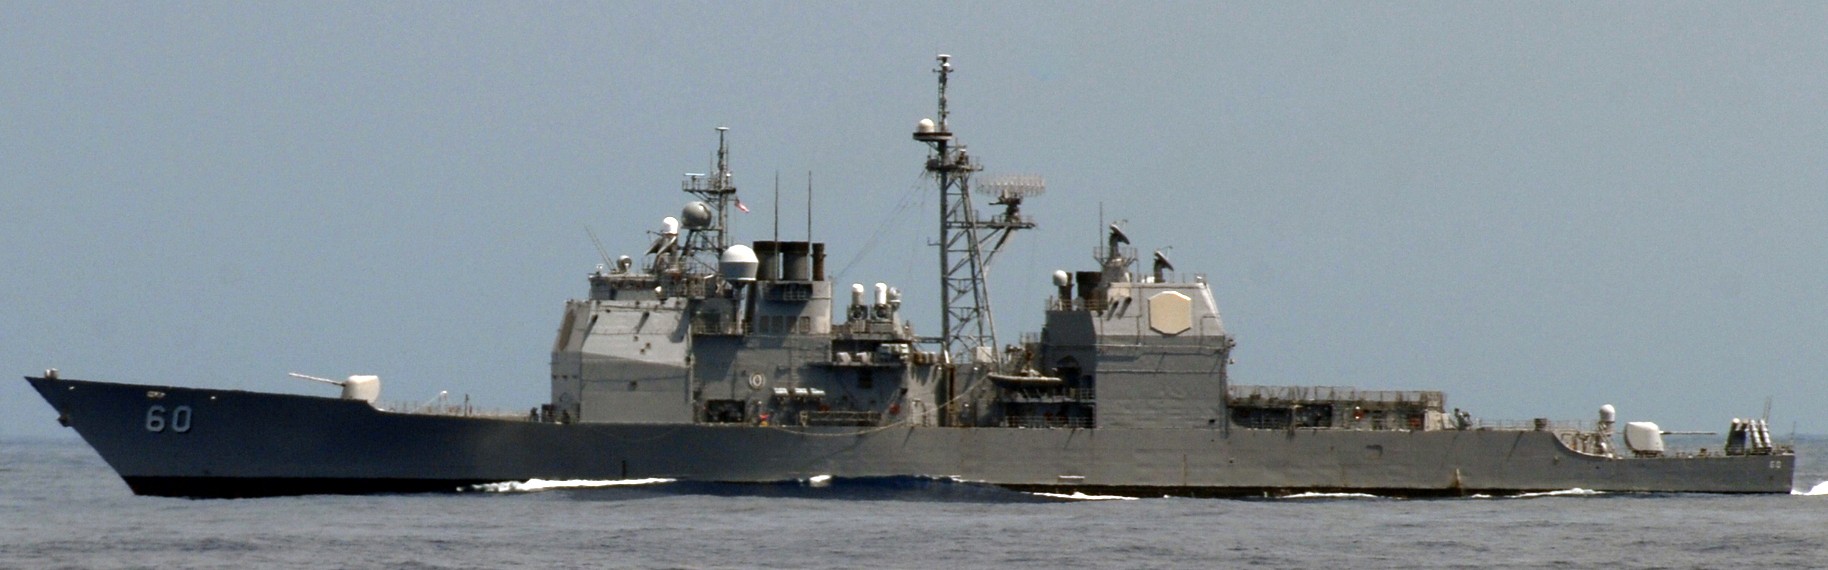 cg-60 uss normandy ticonderoga class guided missile cruiser aegis us navy 24